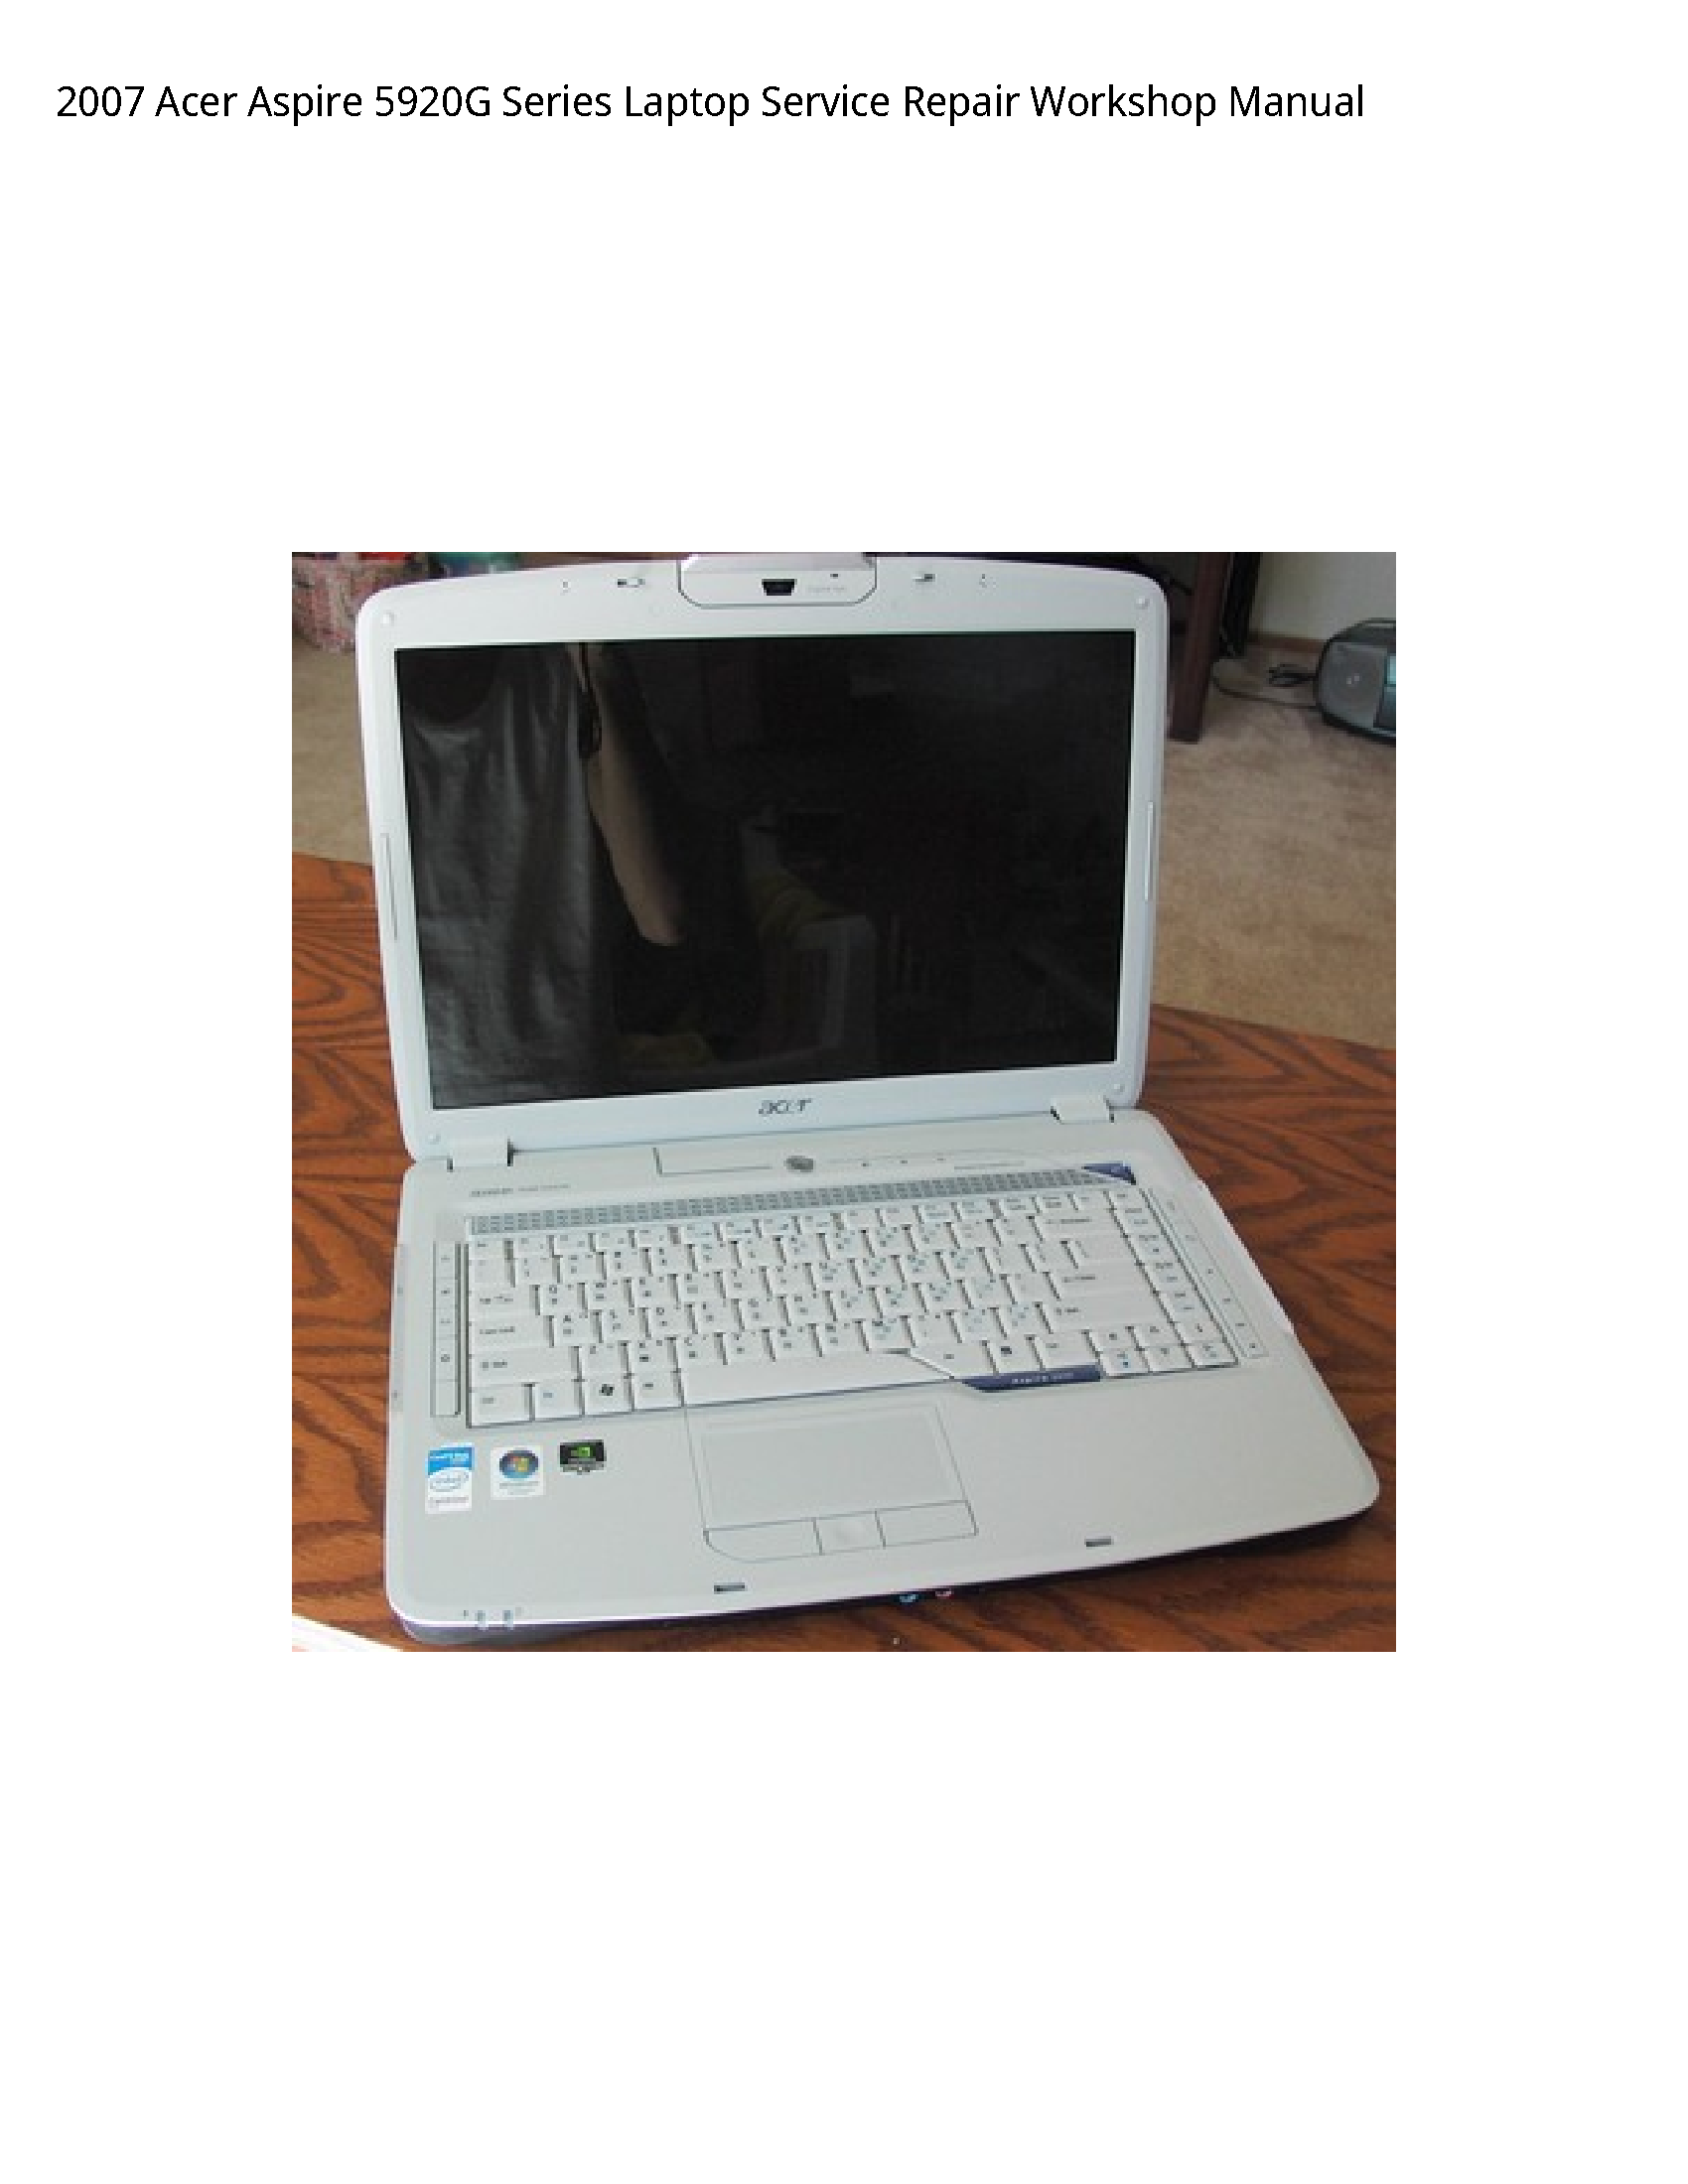 Acer 5920G Aspire Series Laptop manual